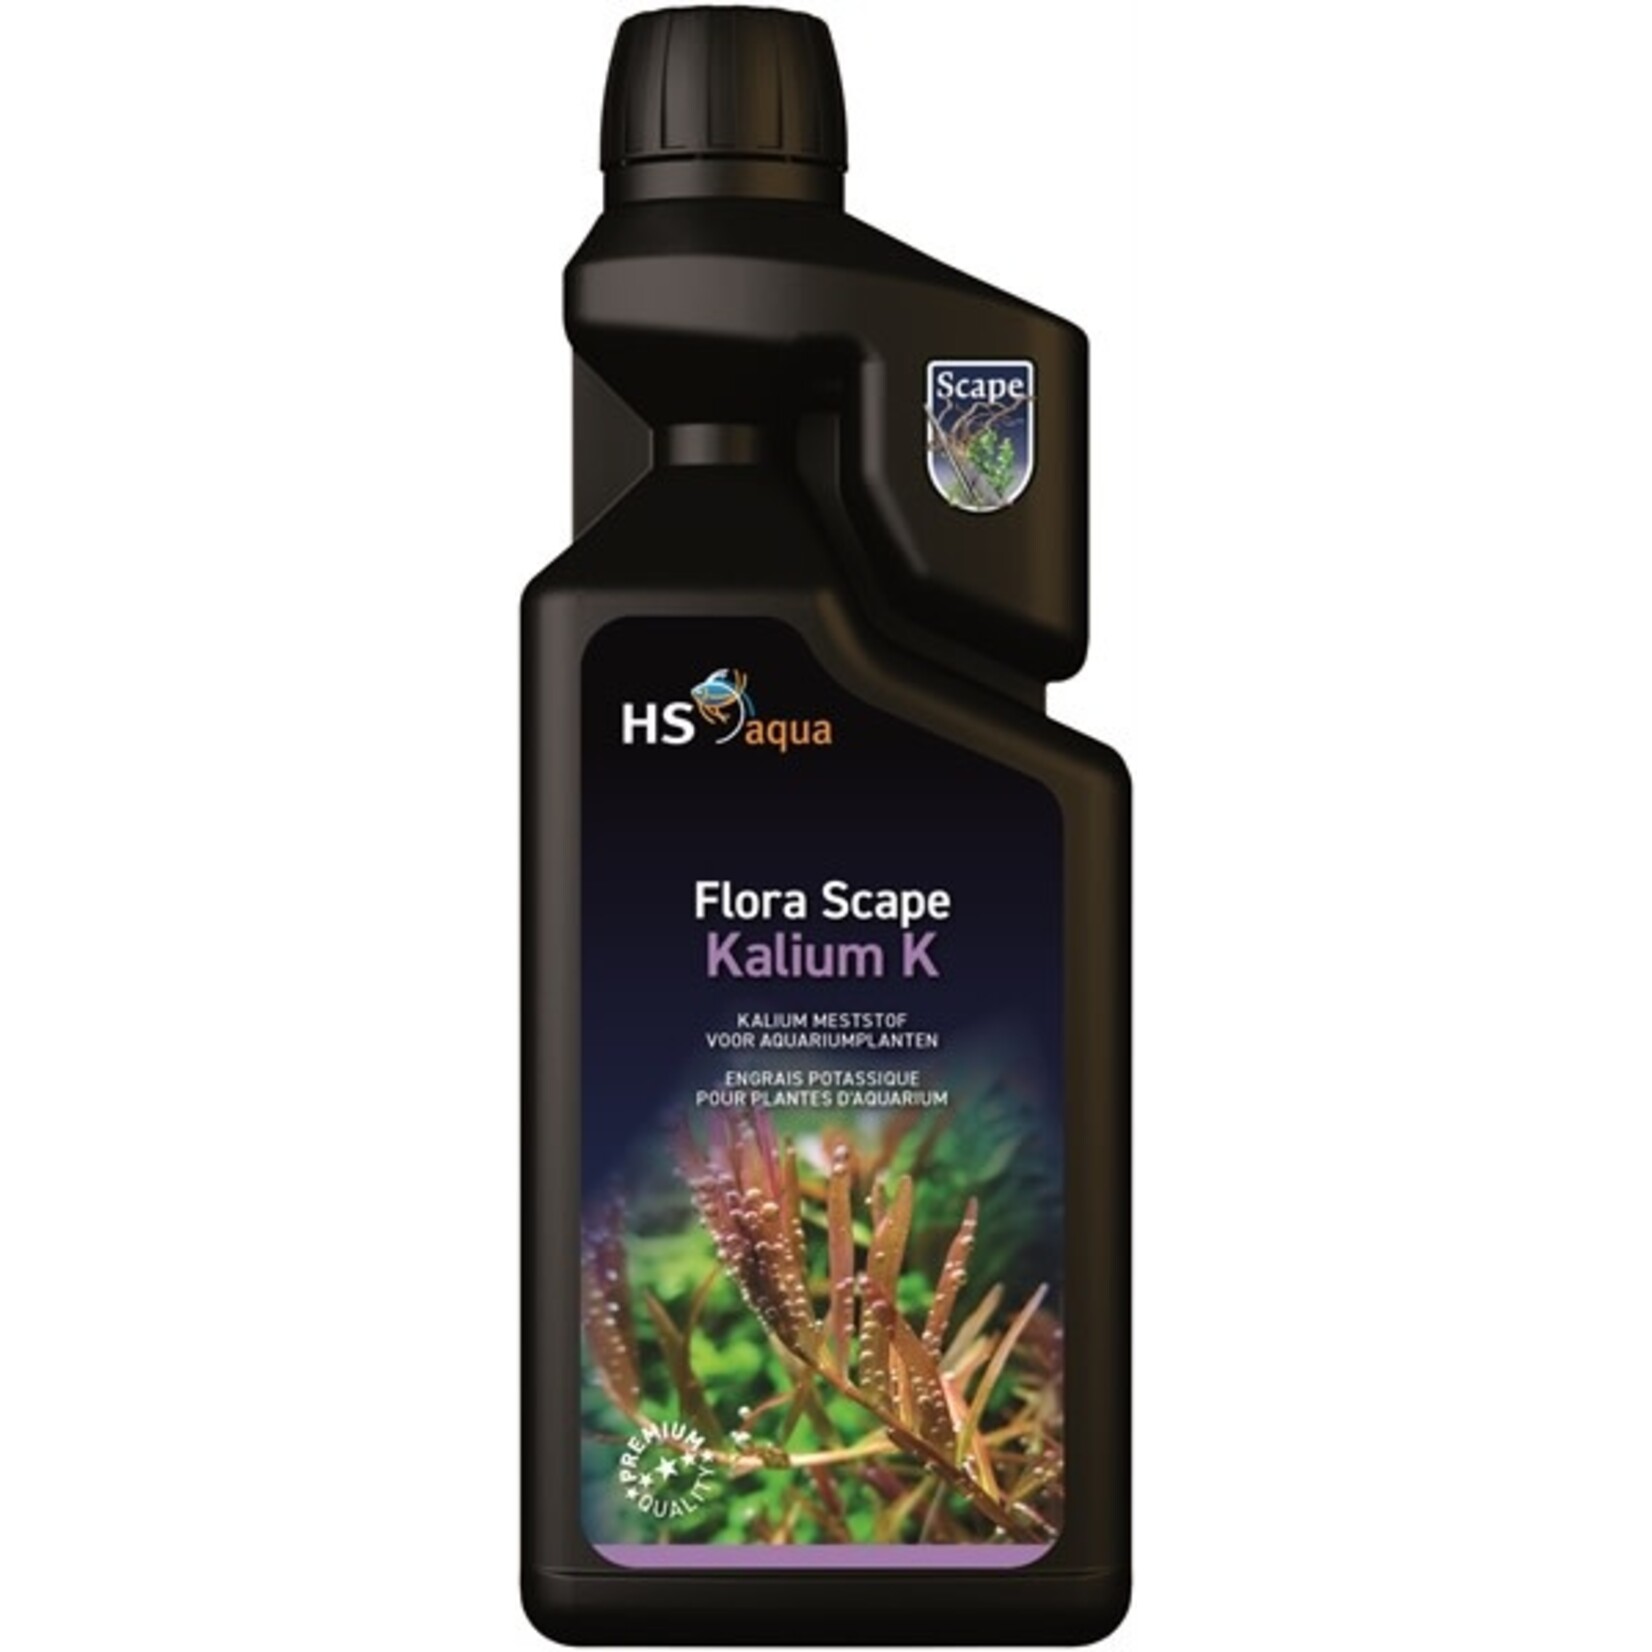 HS Aqua Flora scape kalium k 1000 ml